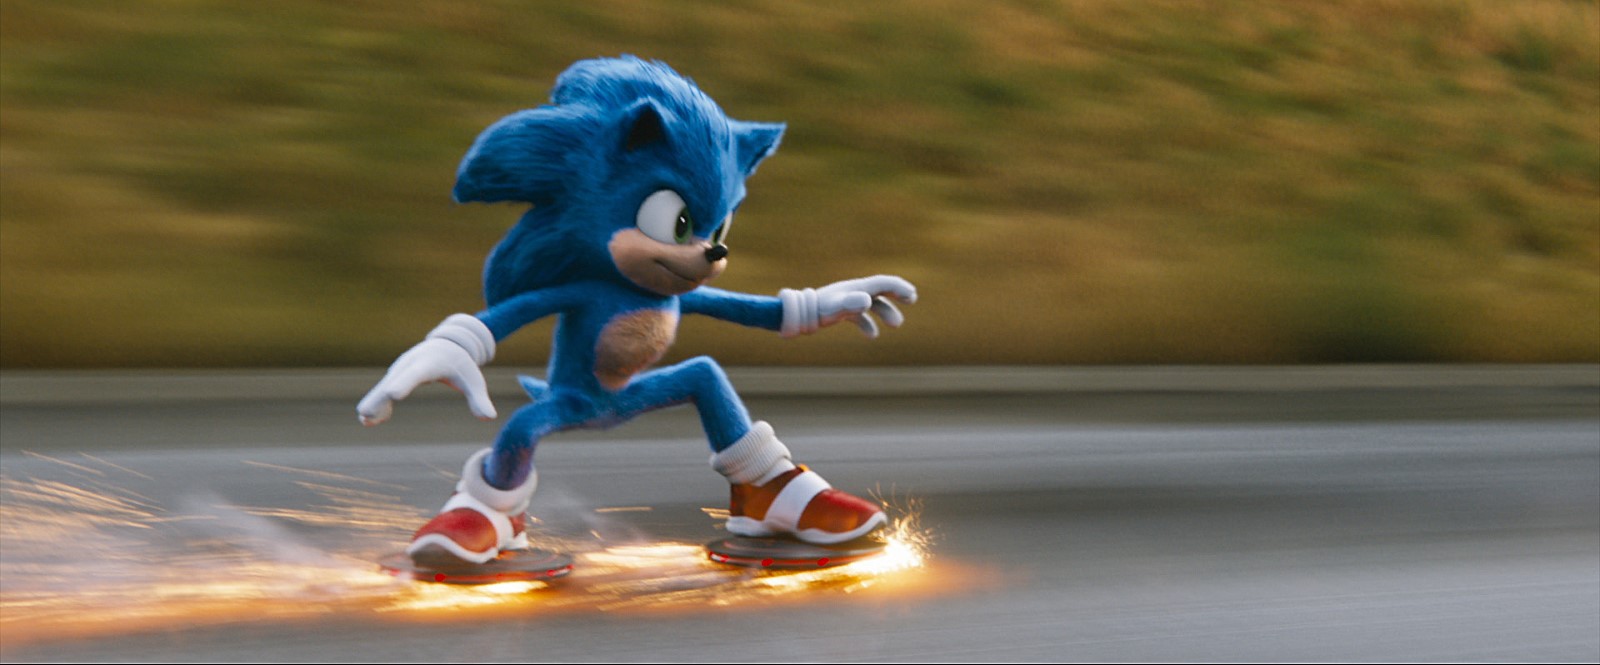 Szenenbild 6 vom Film Sonic The Hedgehog